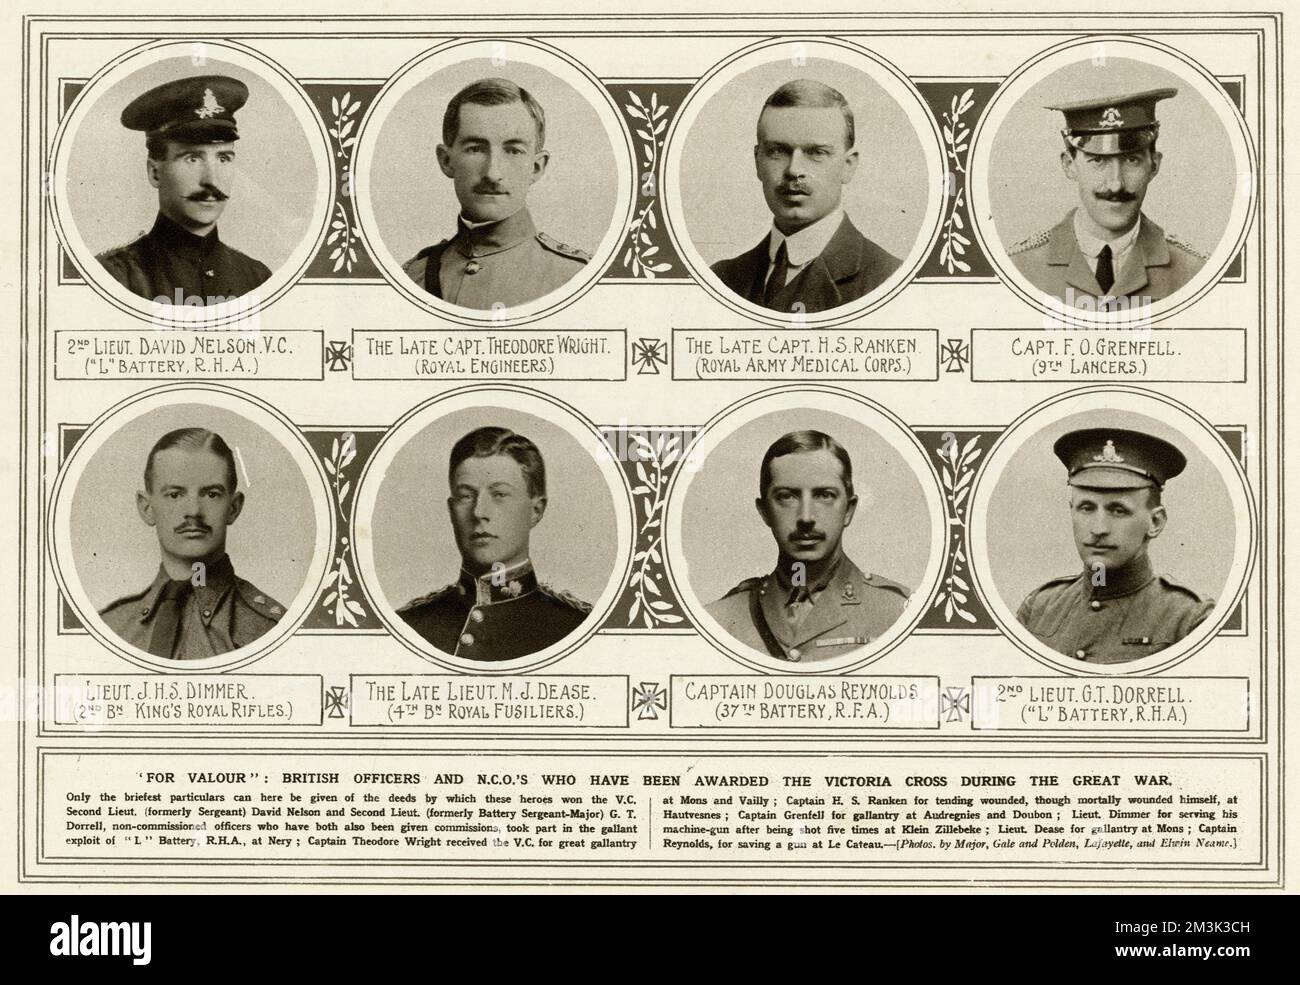 Oficiales Británicos y N.C.O's, quienes fueron premiados con Victoria Cross durante la Primera Guerra Mundial: Desde arriba a la izquierda: 2nd Lieut David Nelson V.C. ('L' Battery, R.H.A); Capt Theodore Wright. (Ingenieros reales); Capt. H.S. Ranken (Cuerpo Médico Real del Ejército); Capt F.O. Grenfell (9th Lancers); Lieut J.H.S. Dimmer (2nd BN Rey Rifles reales); Lieut M.J. Dease (4th BN Royal Fusiliers); Capt Douglas Reynolds (37th Battery, R.F.A); 2nd Lieut G.T. Dorrell ('L' Battery, R.H.A.) 1914 Foto de stock